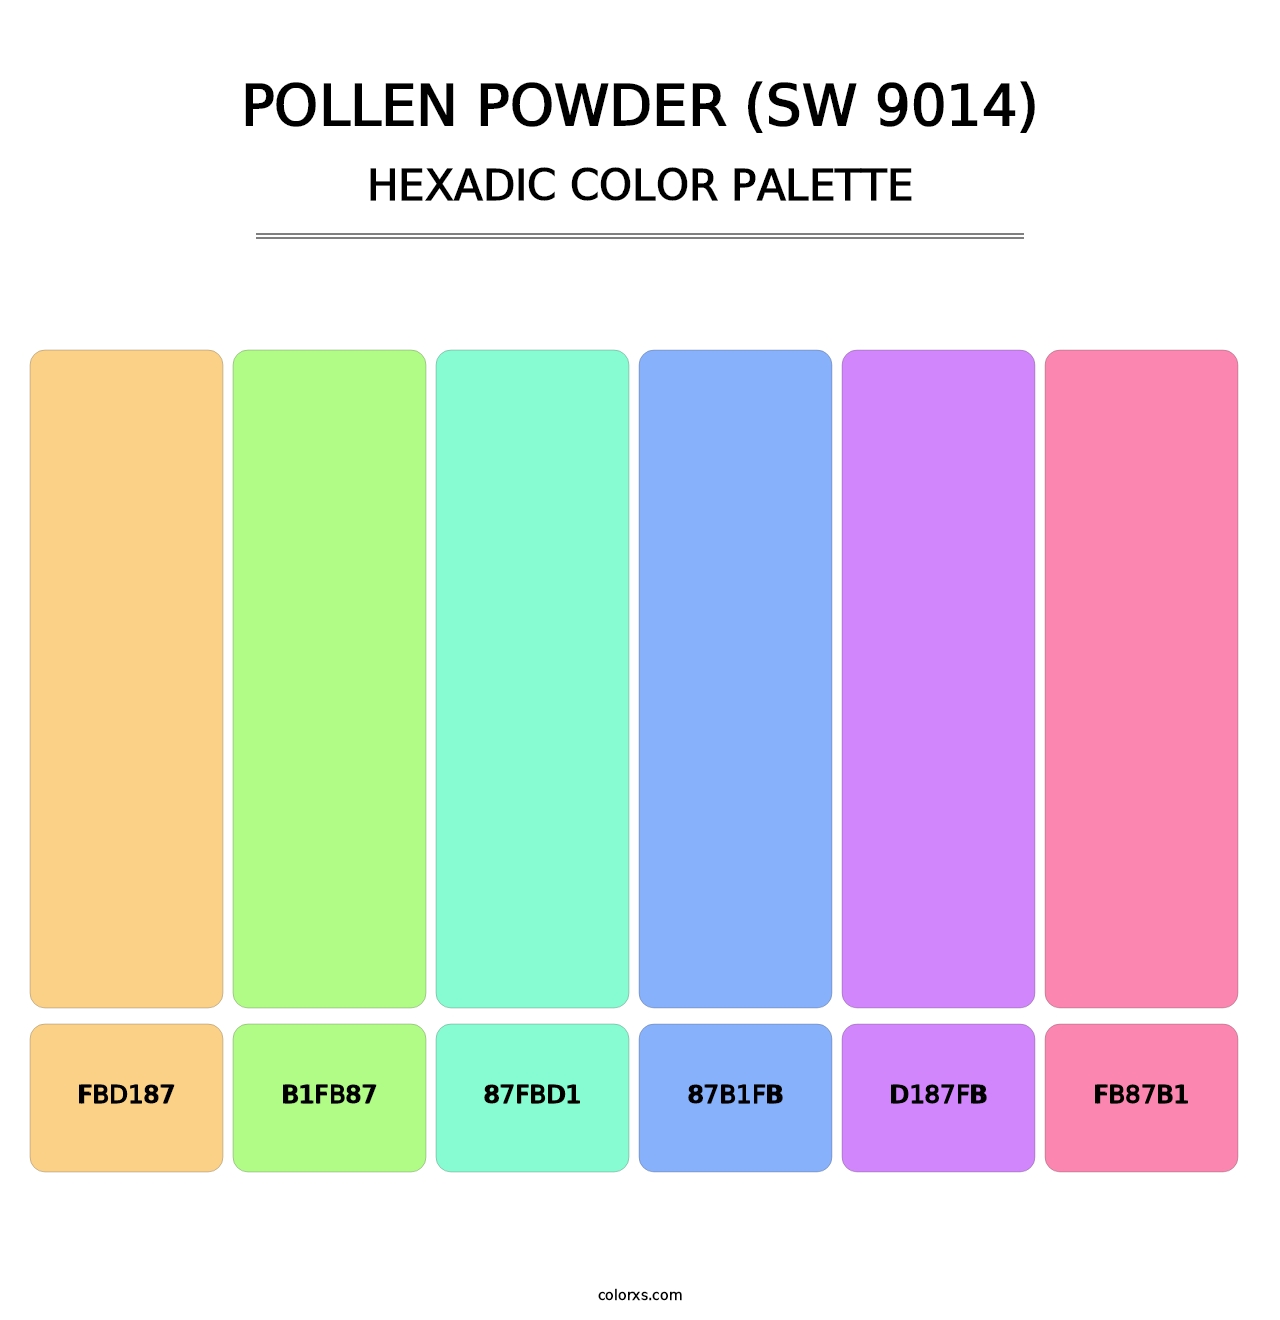 Pollen Powder (SW 9014) - Hexadic Color Palette